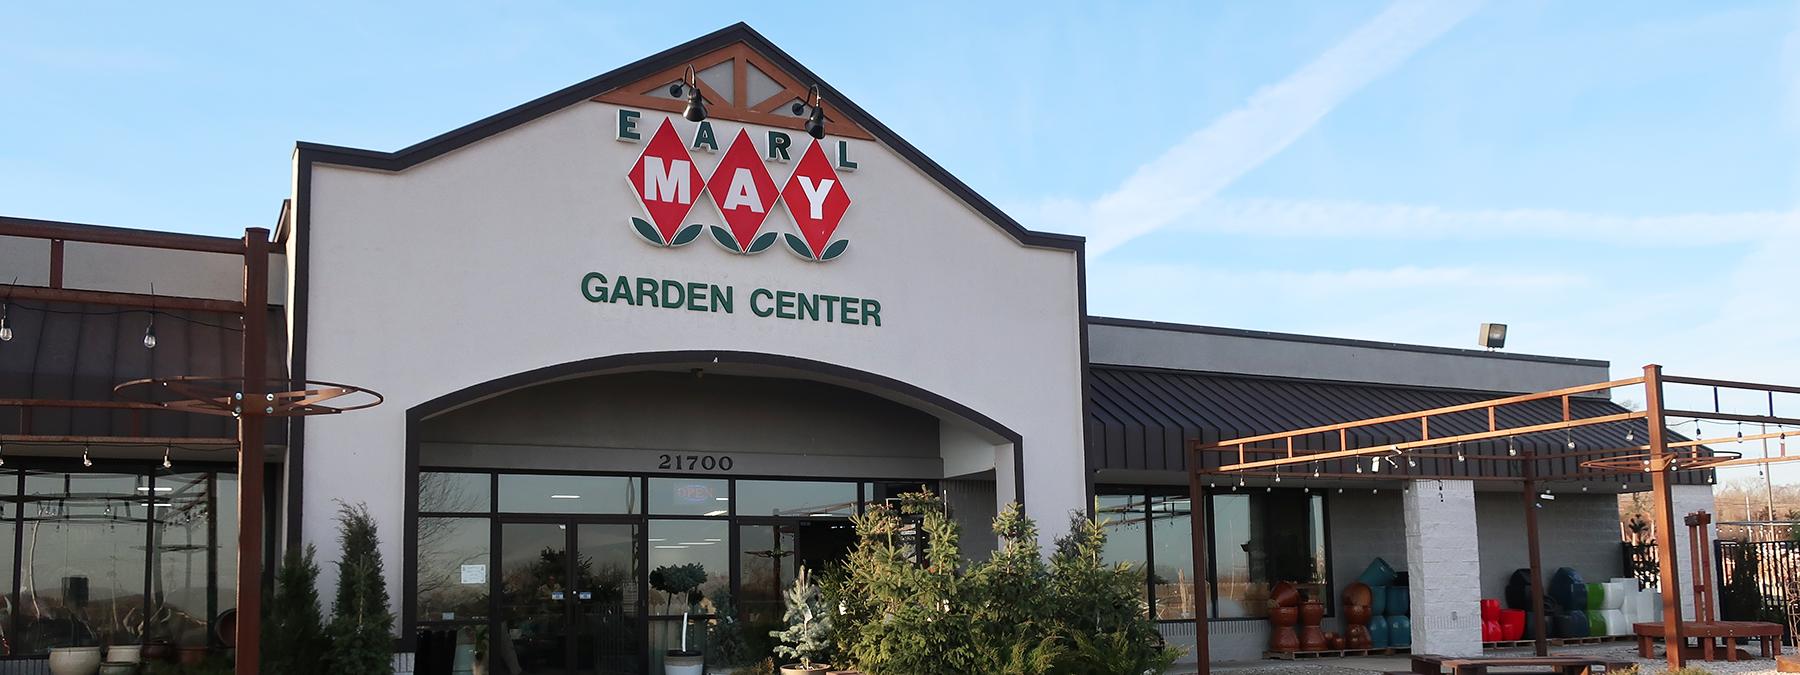 Shawnee, KS Garden Center | Earl May